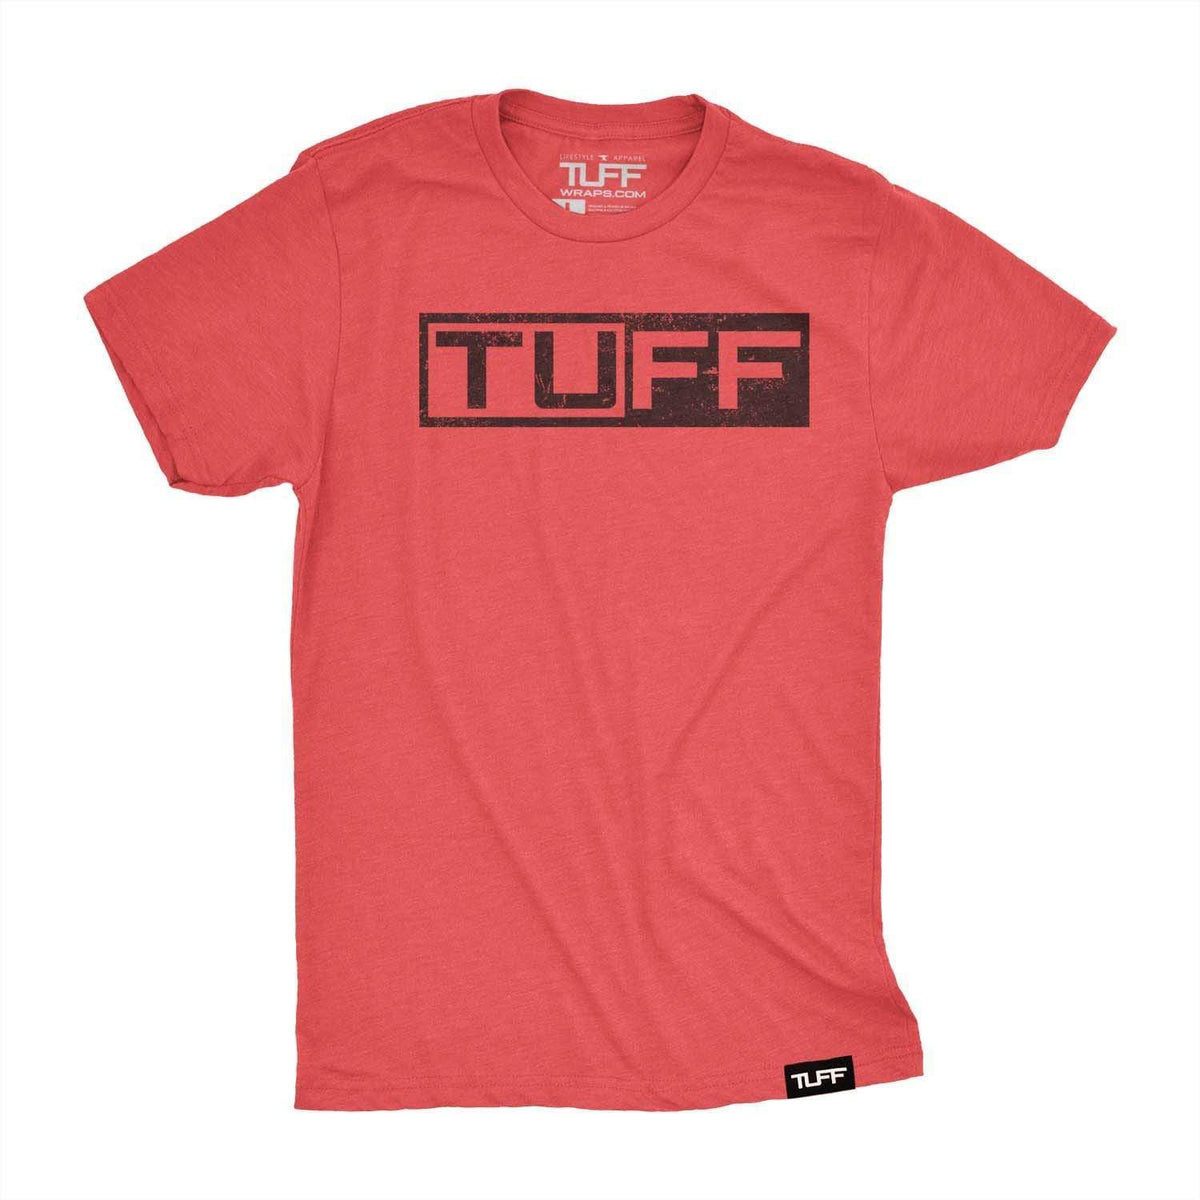 TUFF Block Tee S / Vintage Red TuffWraps.com